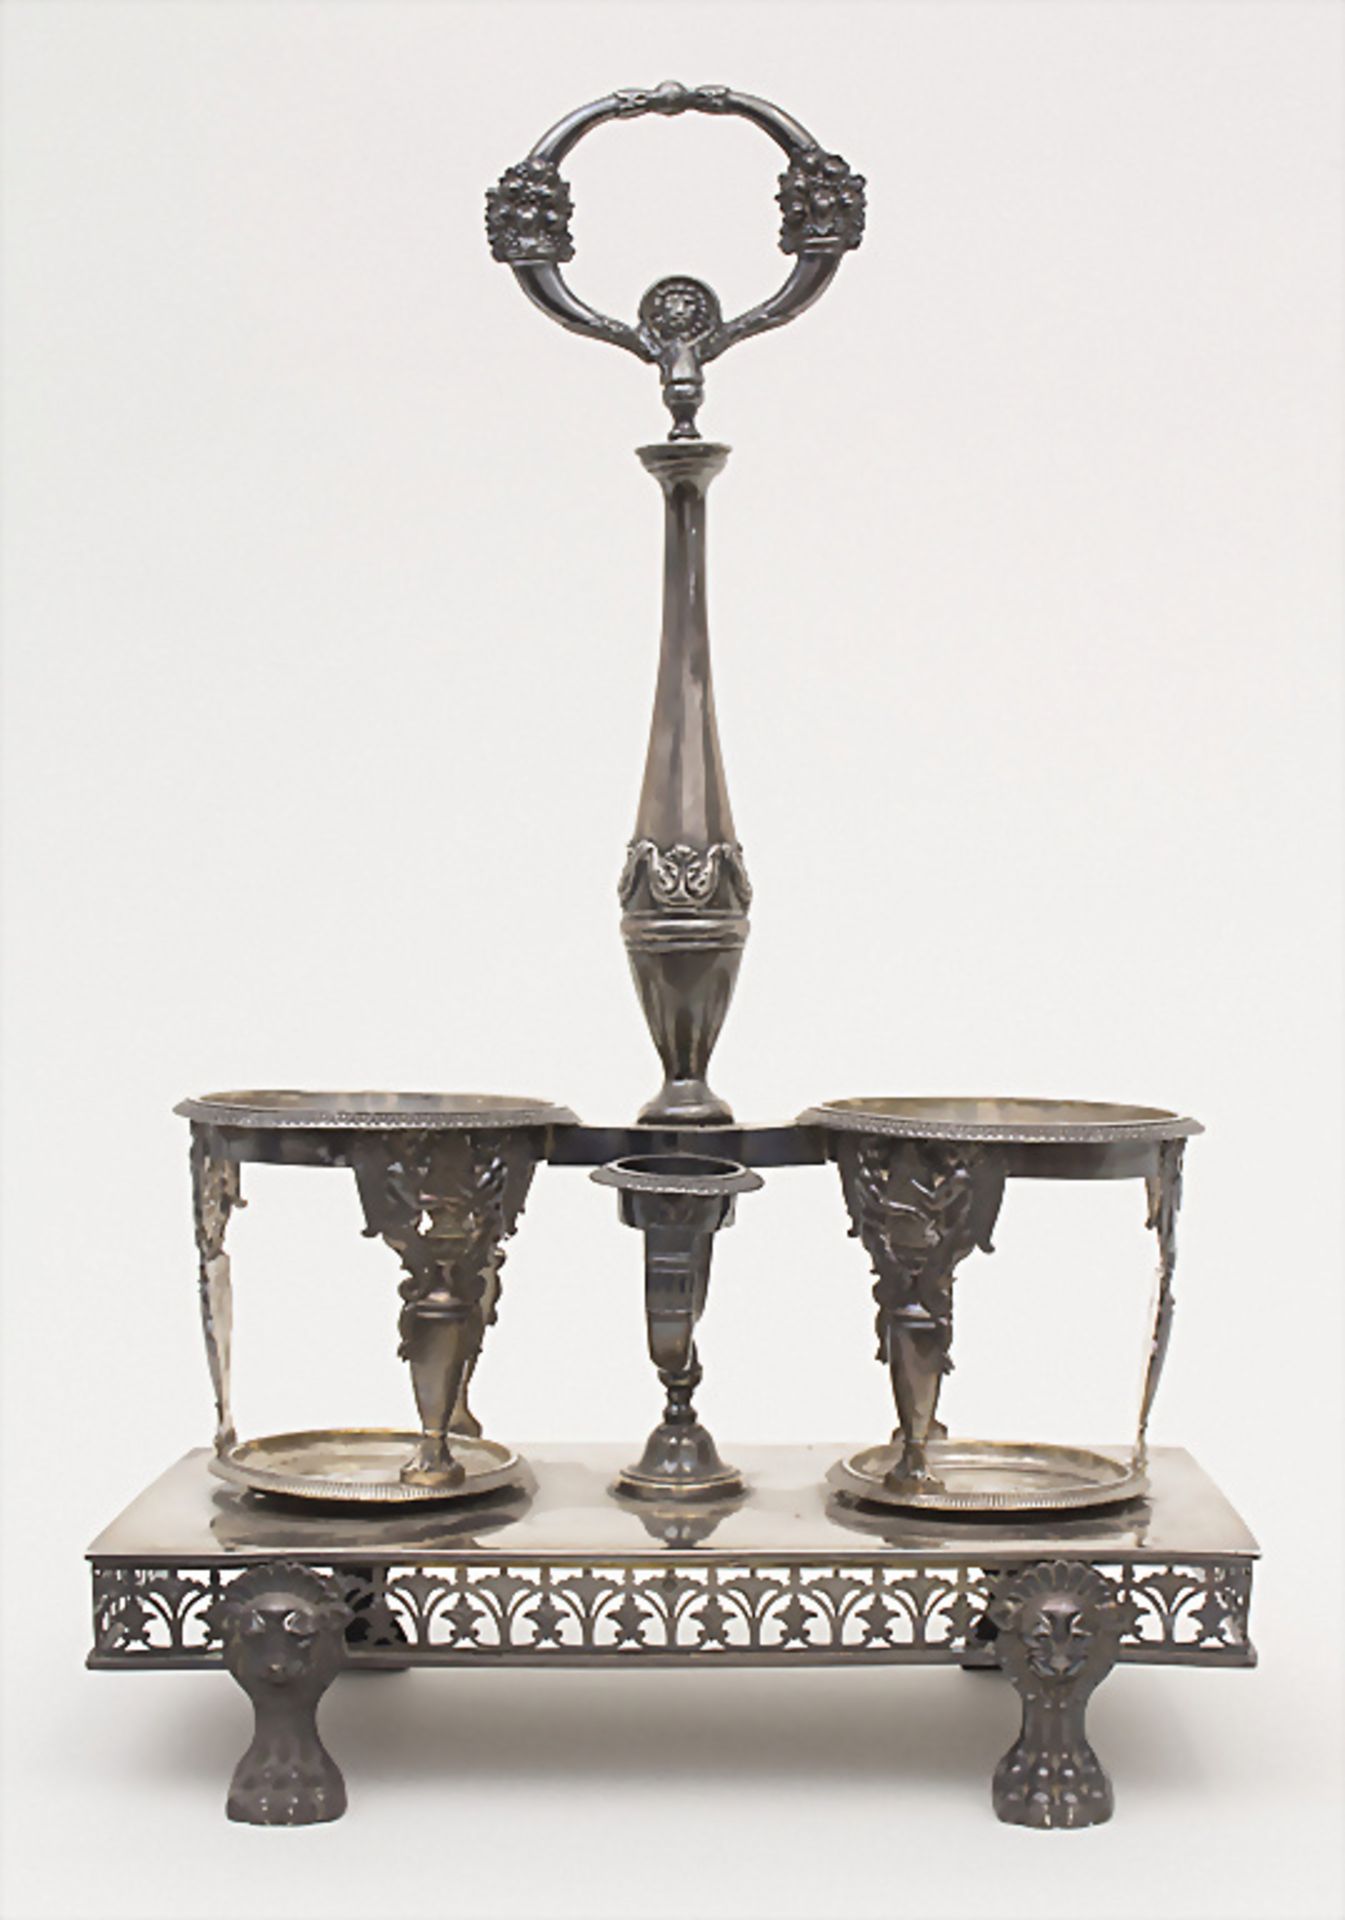 Empire-Menage / A silver cruet stand, Meister Jean-Pierre Bibron, Paris, 1803-1809